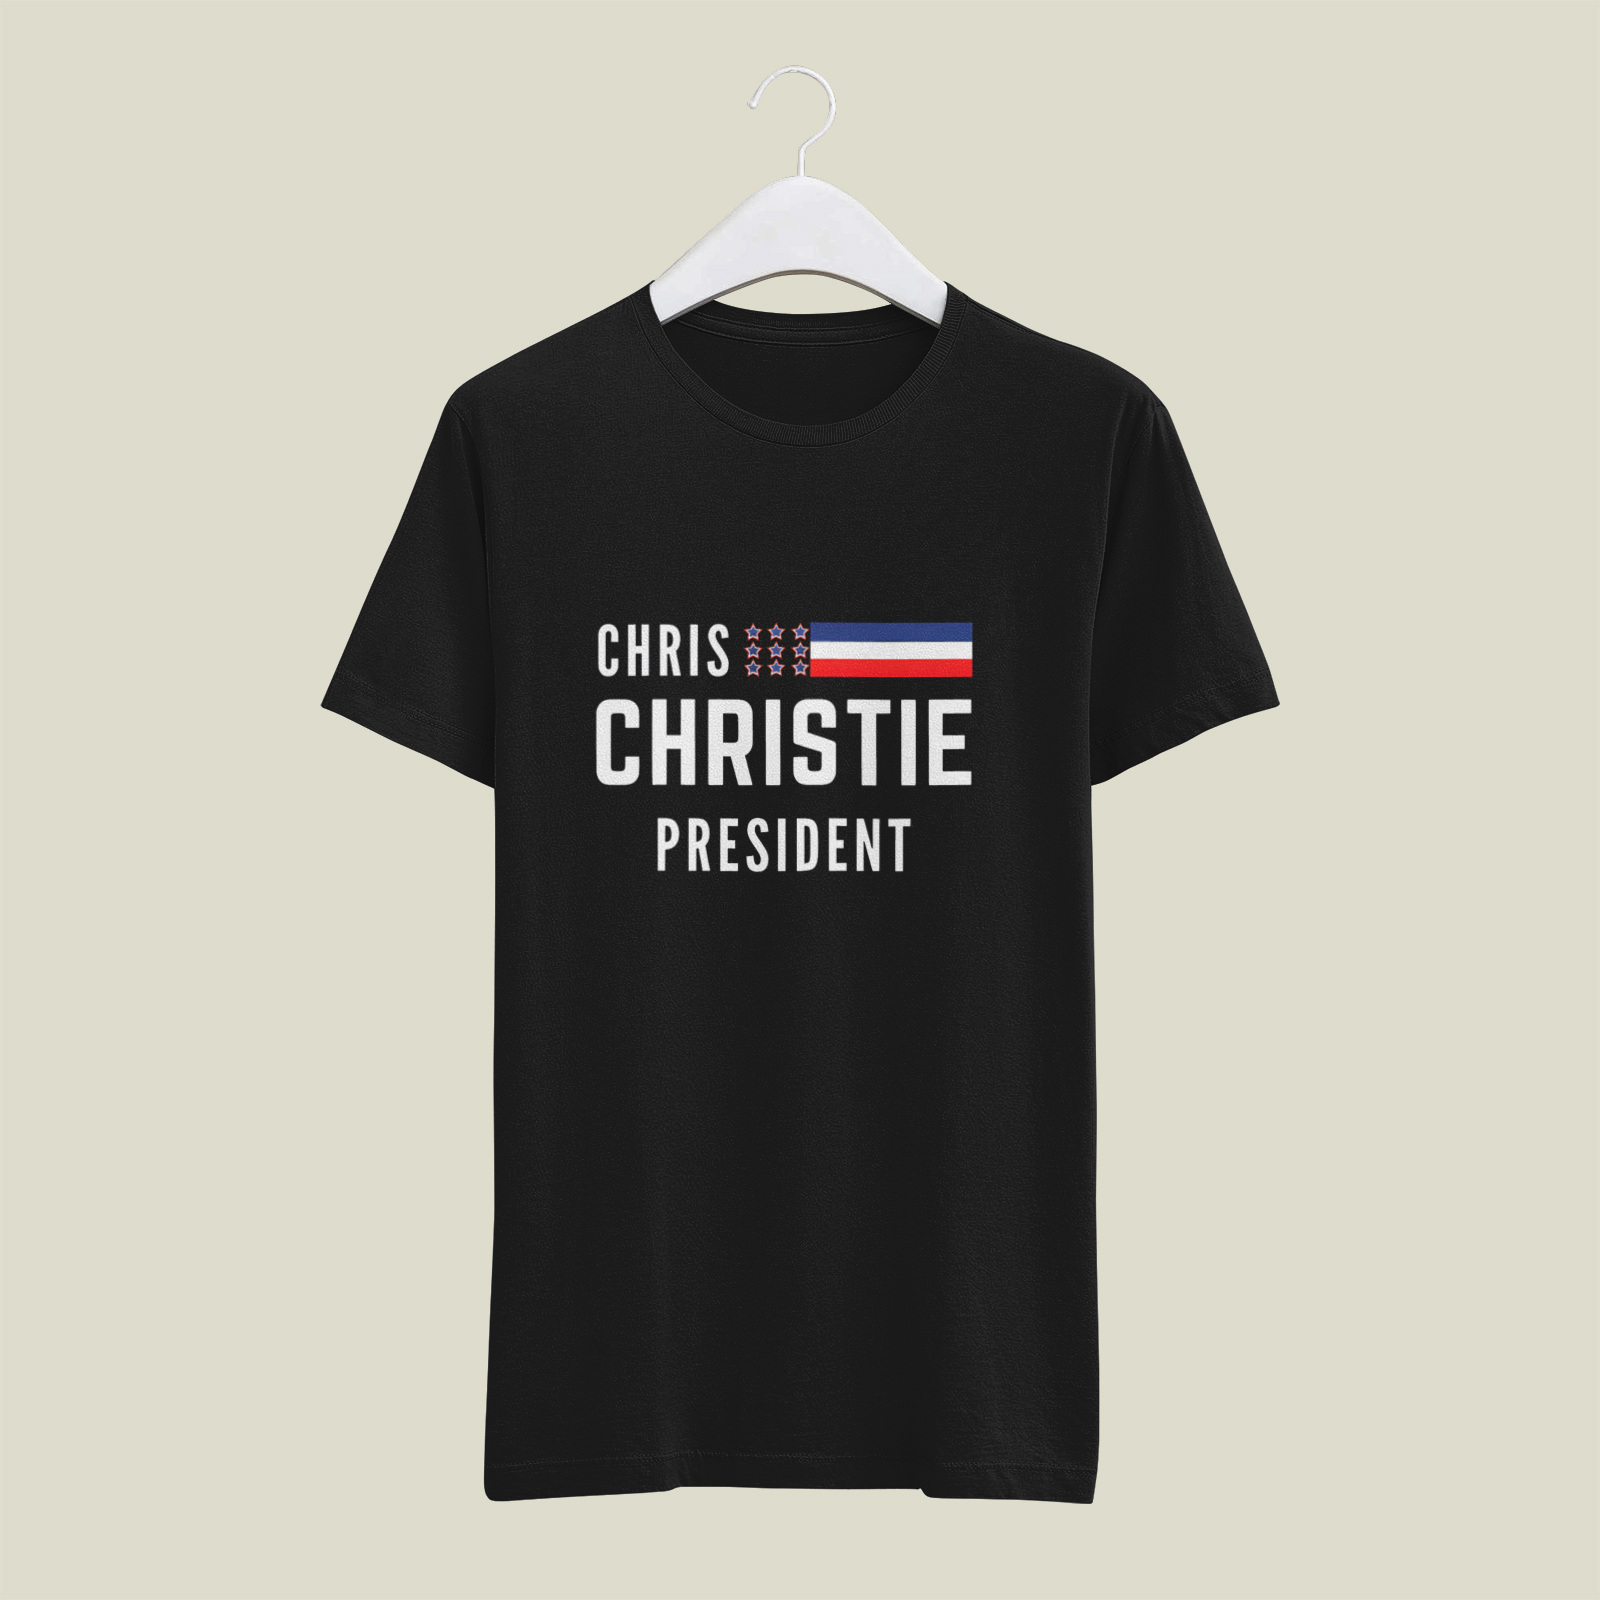 CRIS PRESIDE claasic, cool T-shirt design, TEE